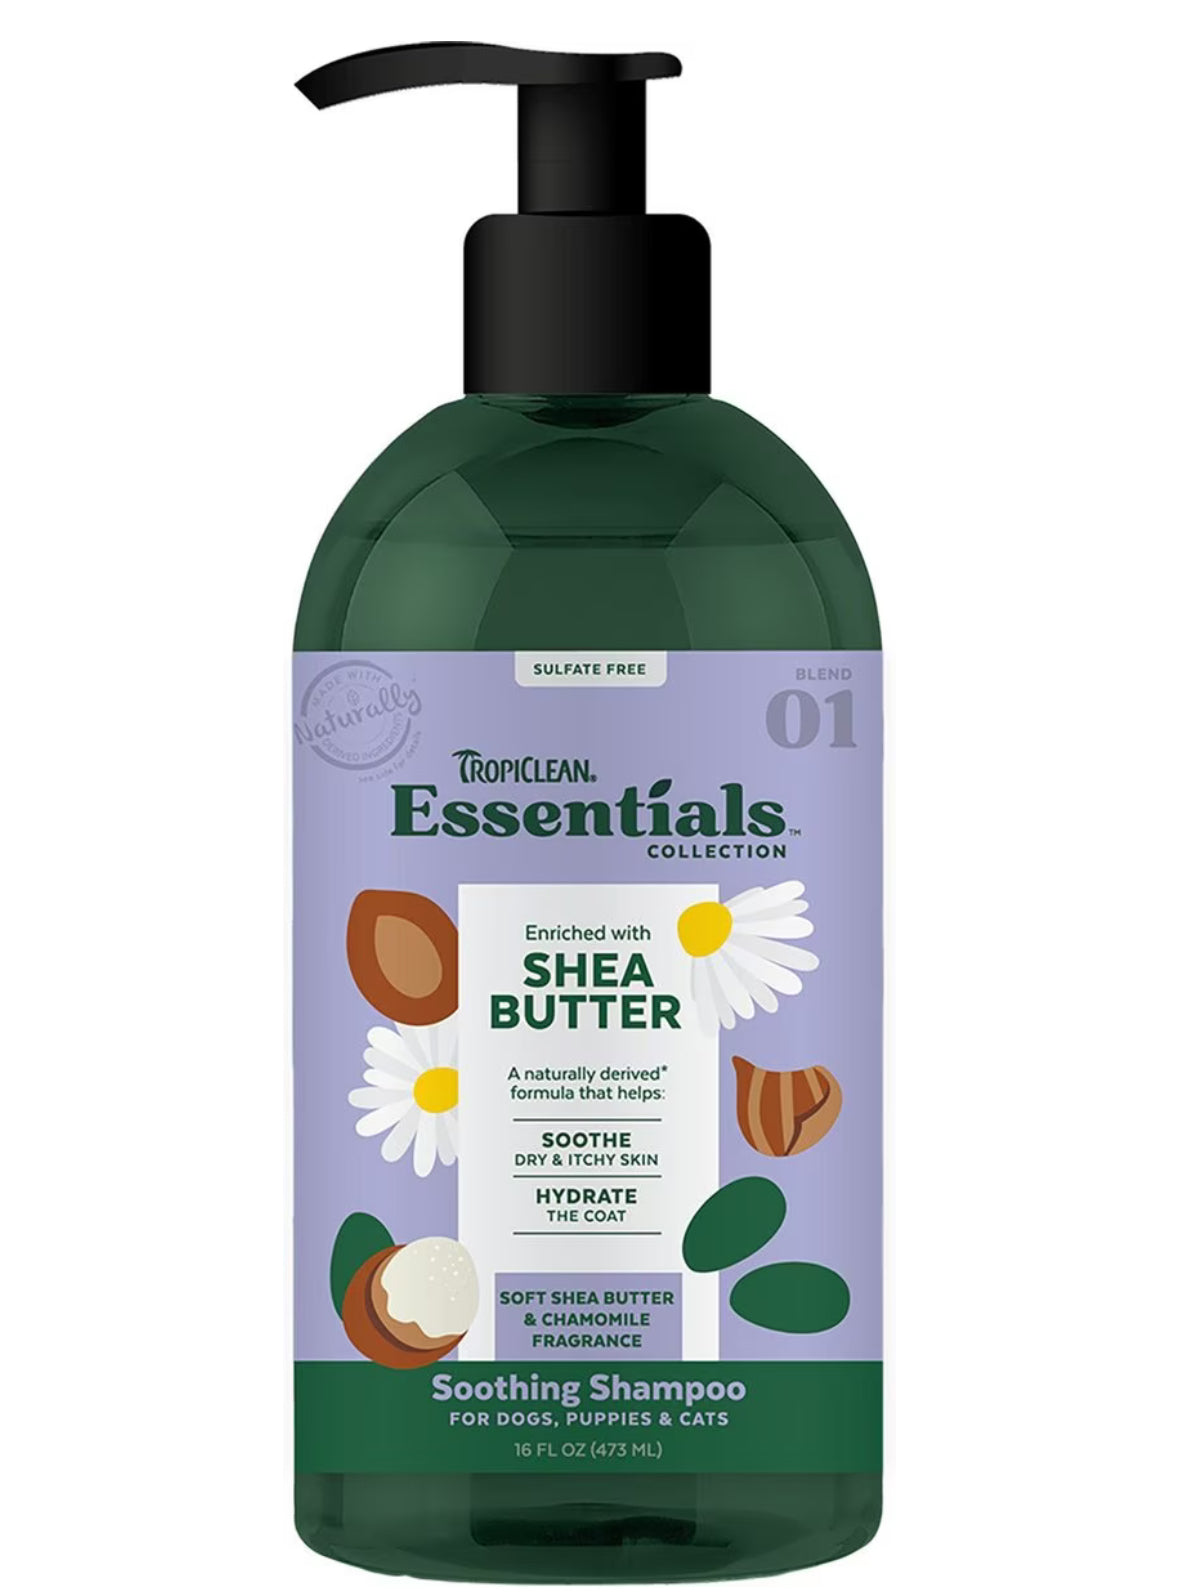 Tropiclean essentials soothing shampoo